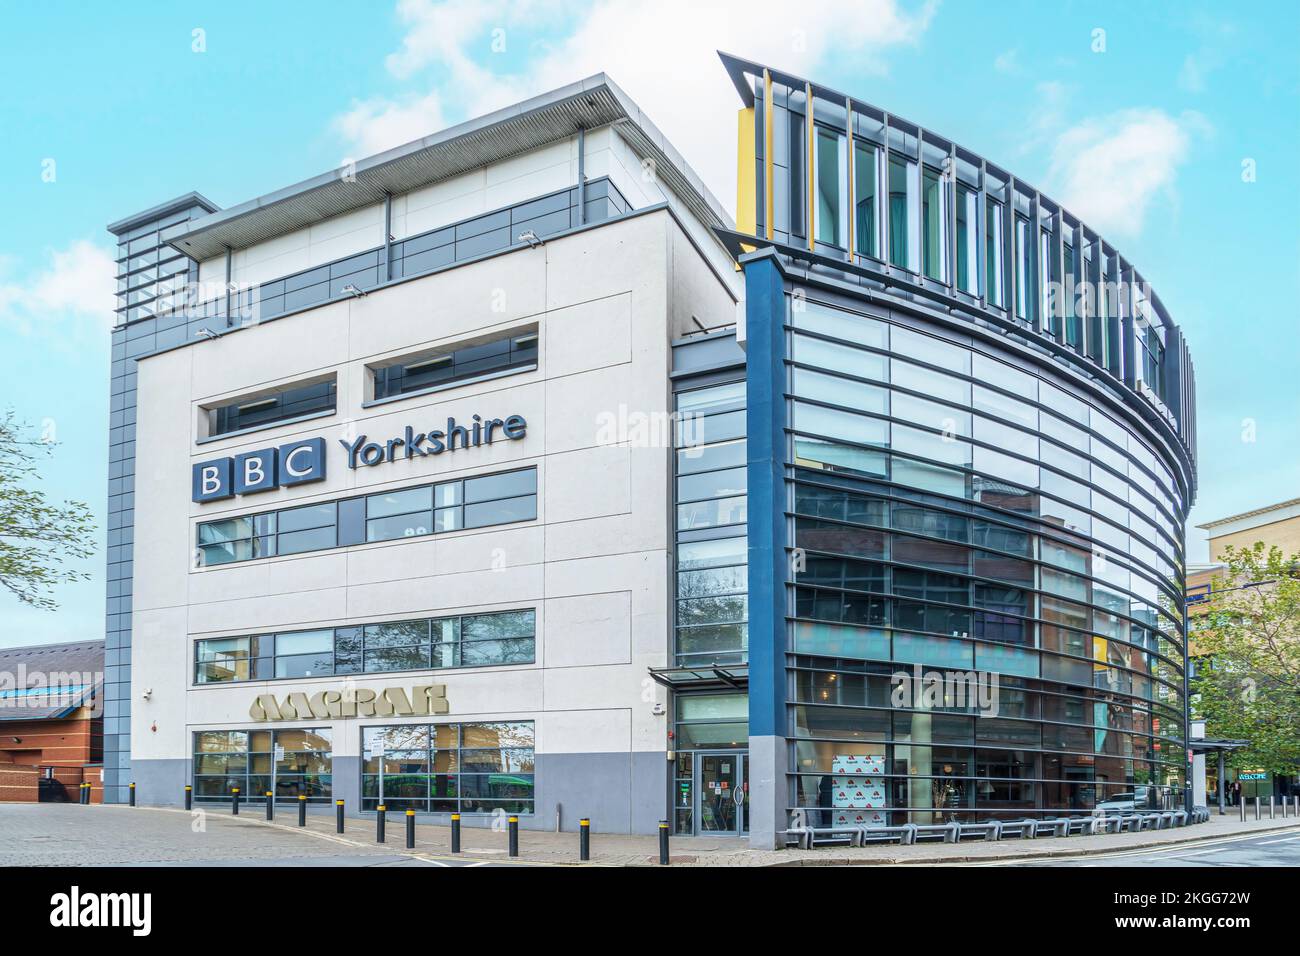 BBC Yorkshire in Leeds Stock Photo